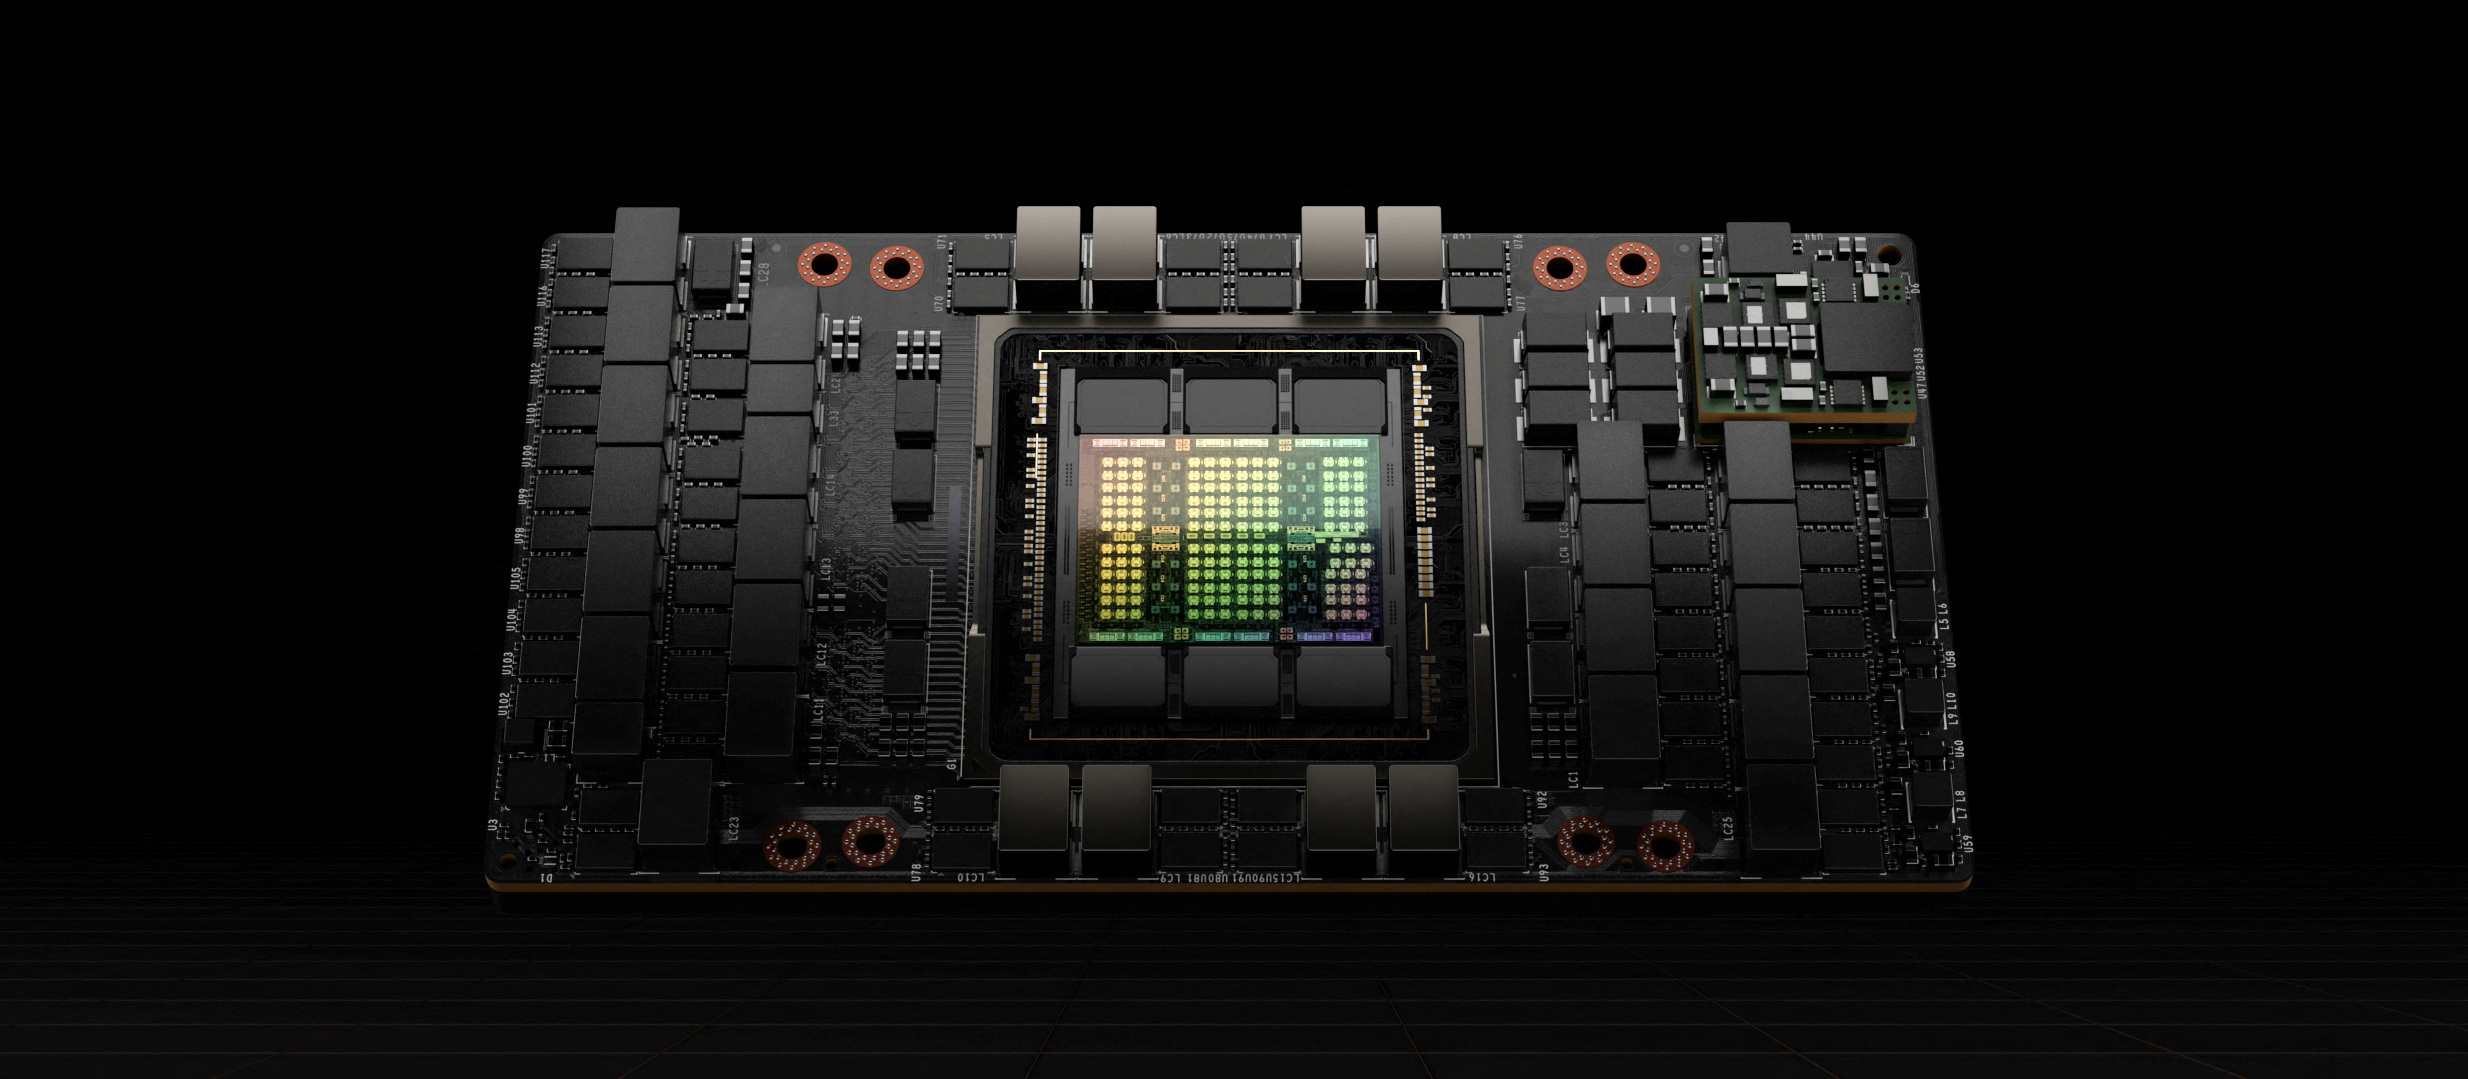 H100, la última GPU de Nvidia se ve en esta foto en Santa Clara